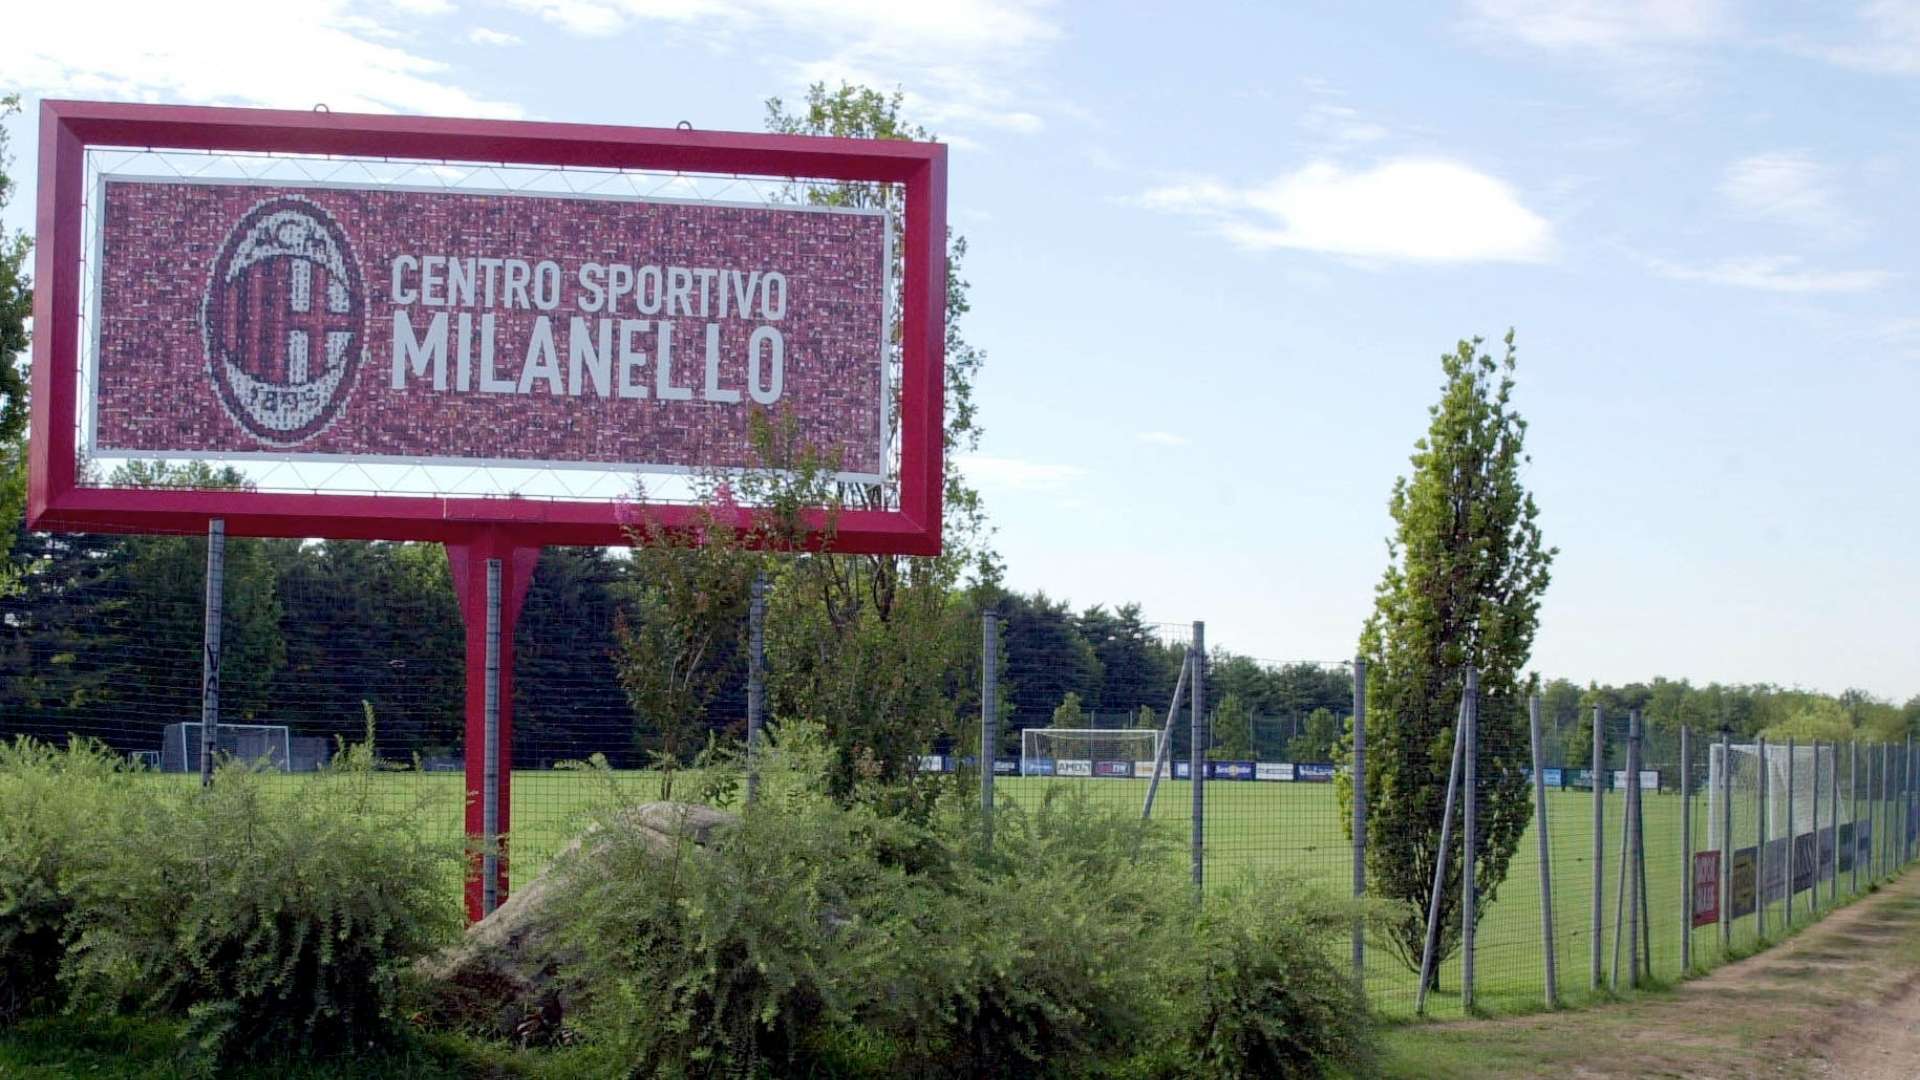 Milanello AC Milan training center